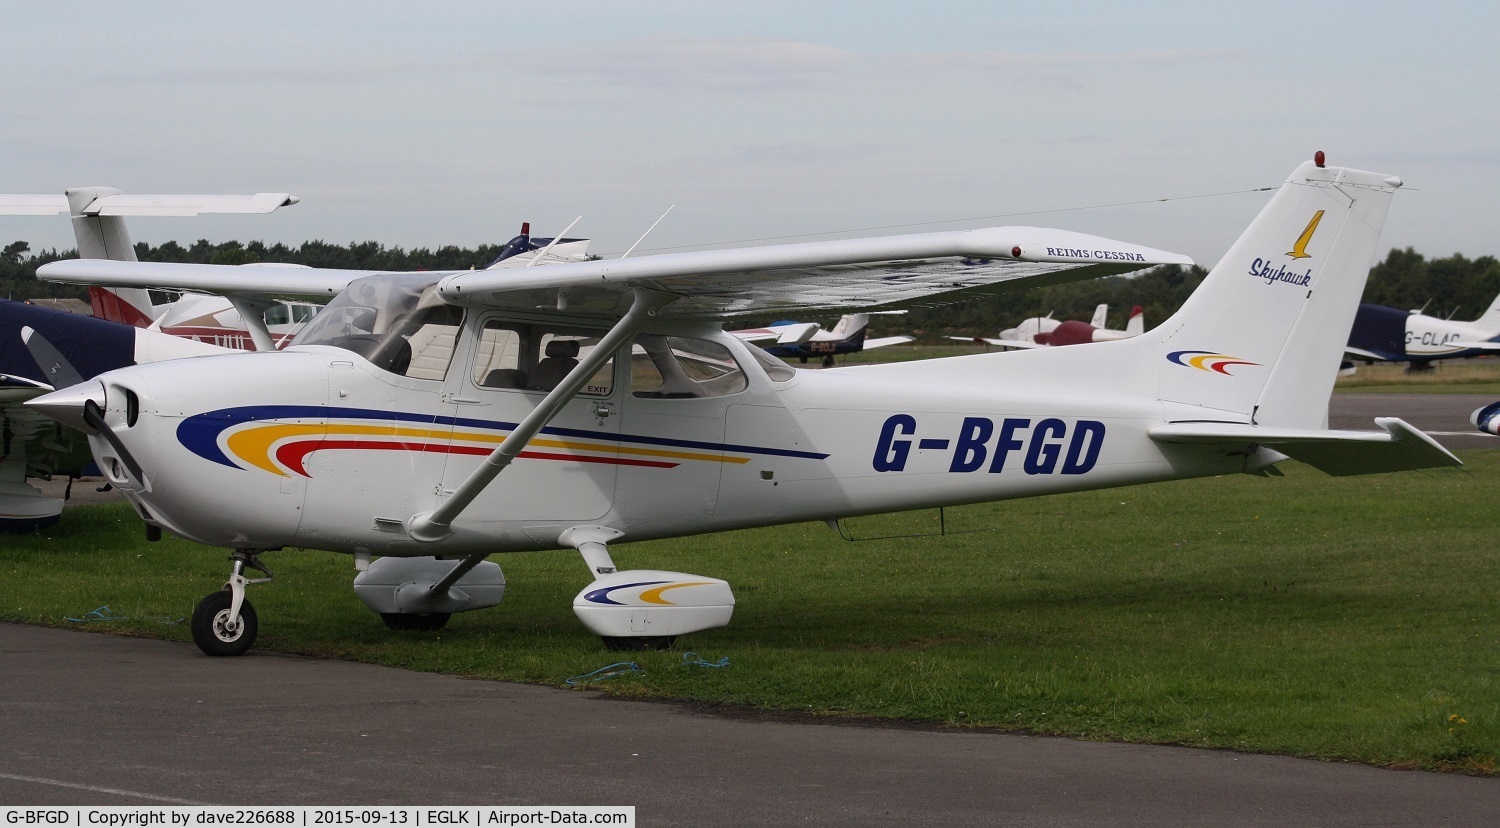 G-BFGD, 1977 Reims F172N Skyhawk C/N 1545, G BFGD at Blackbushe